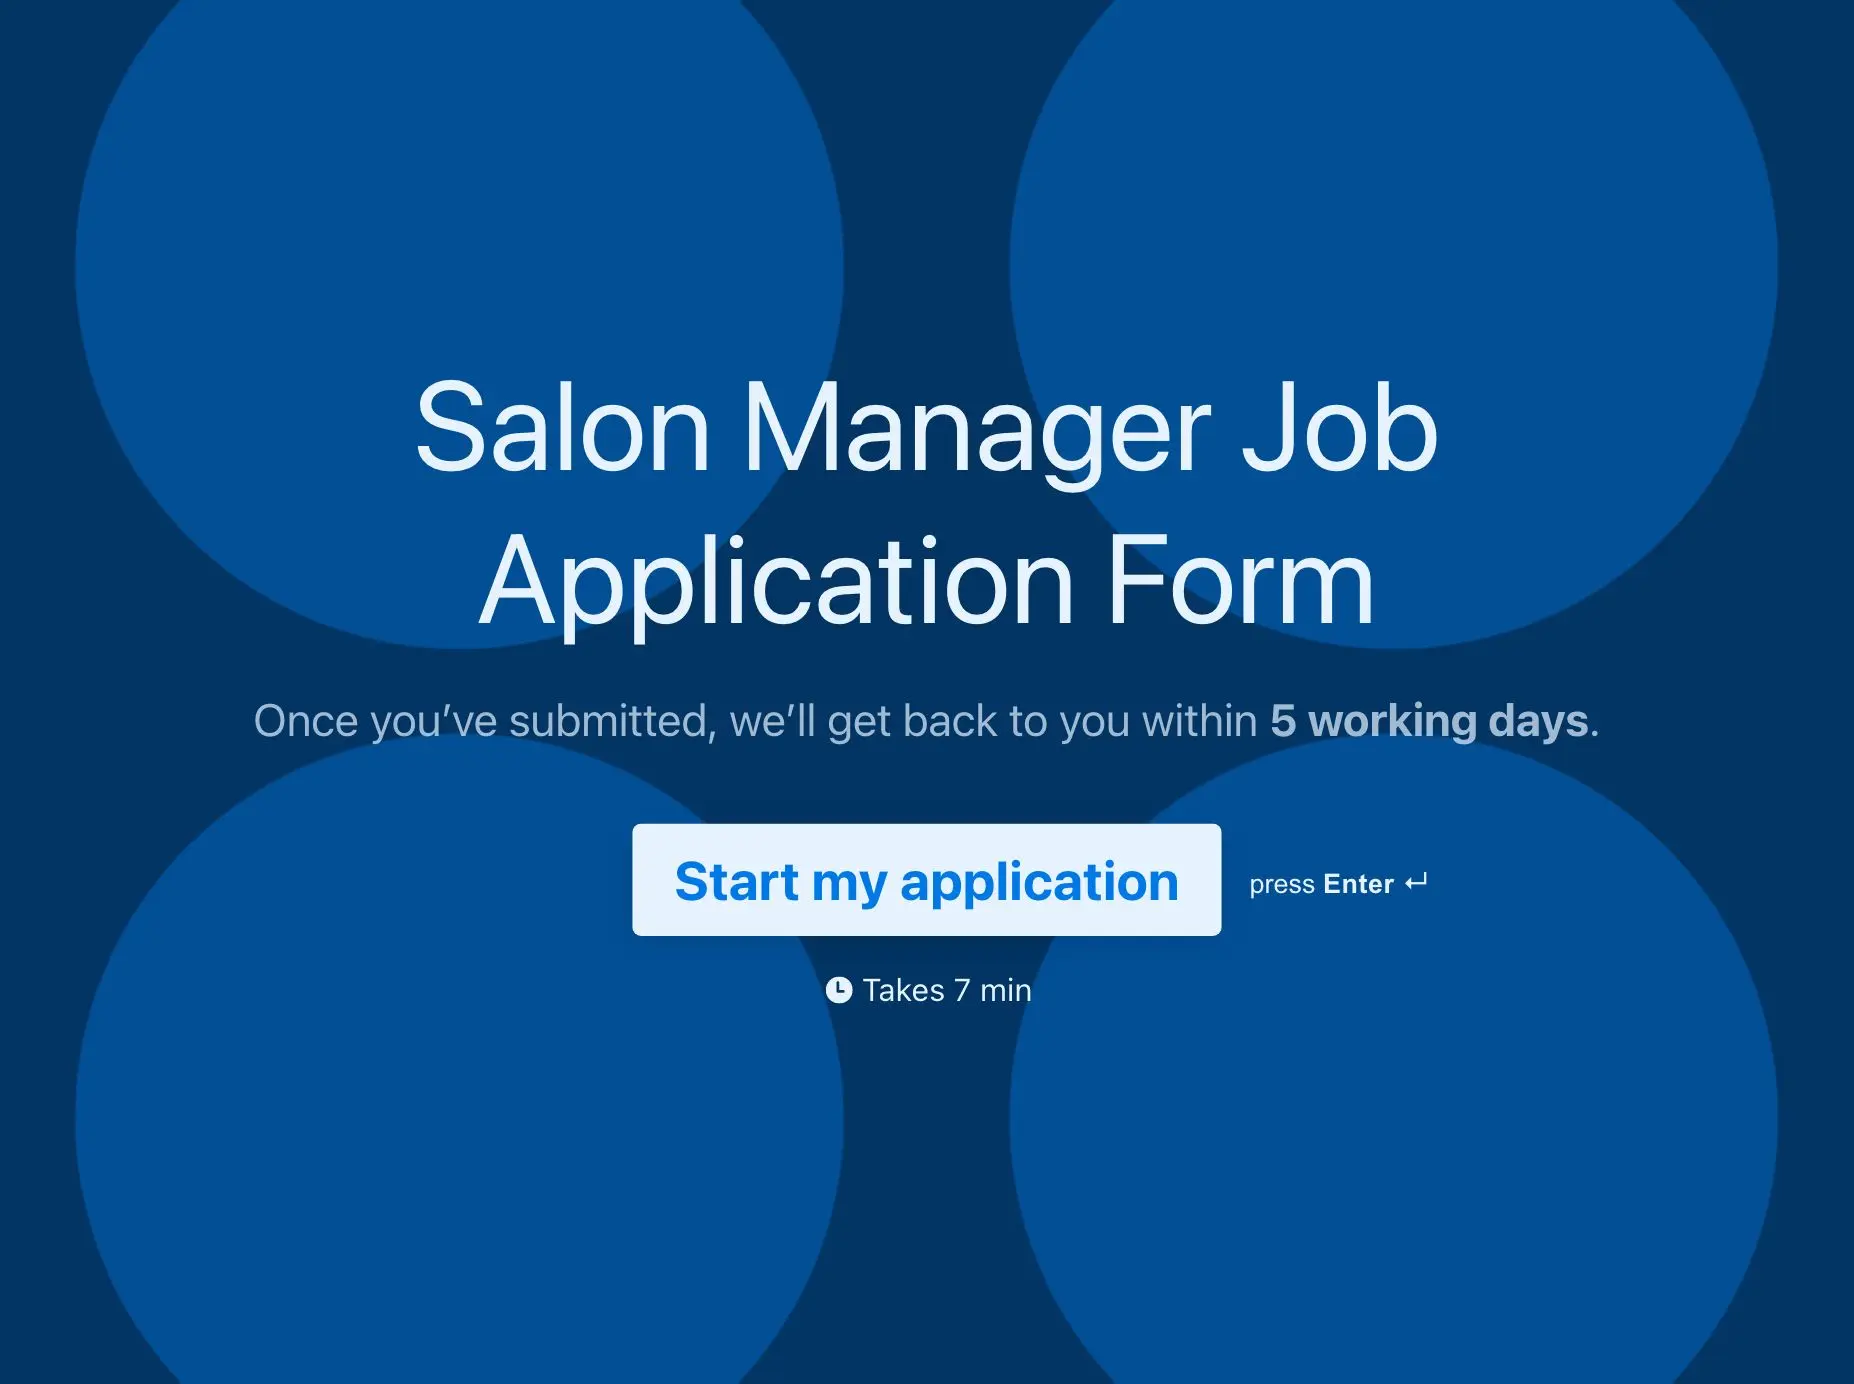 Salon Manager Job Application Form Template Hero